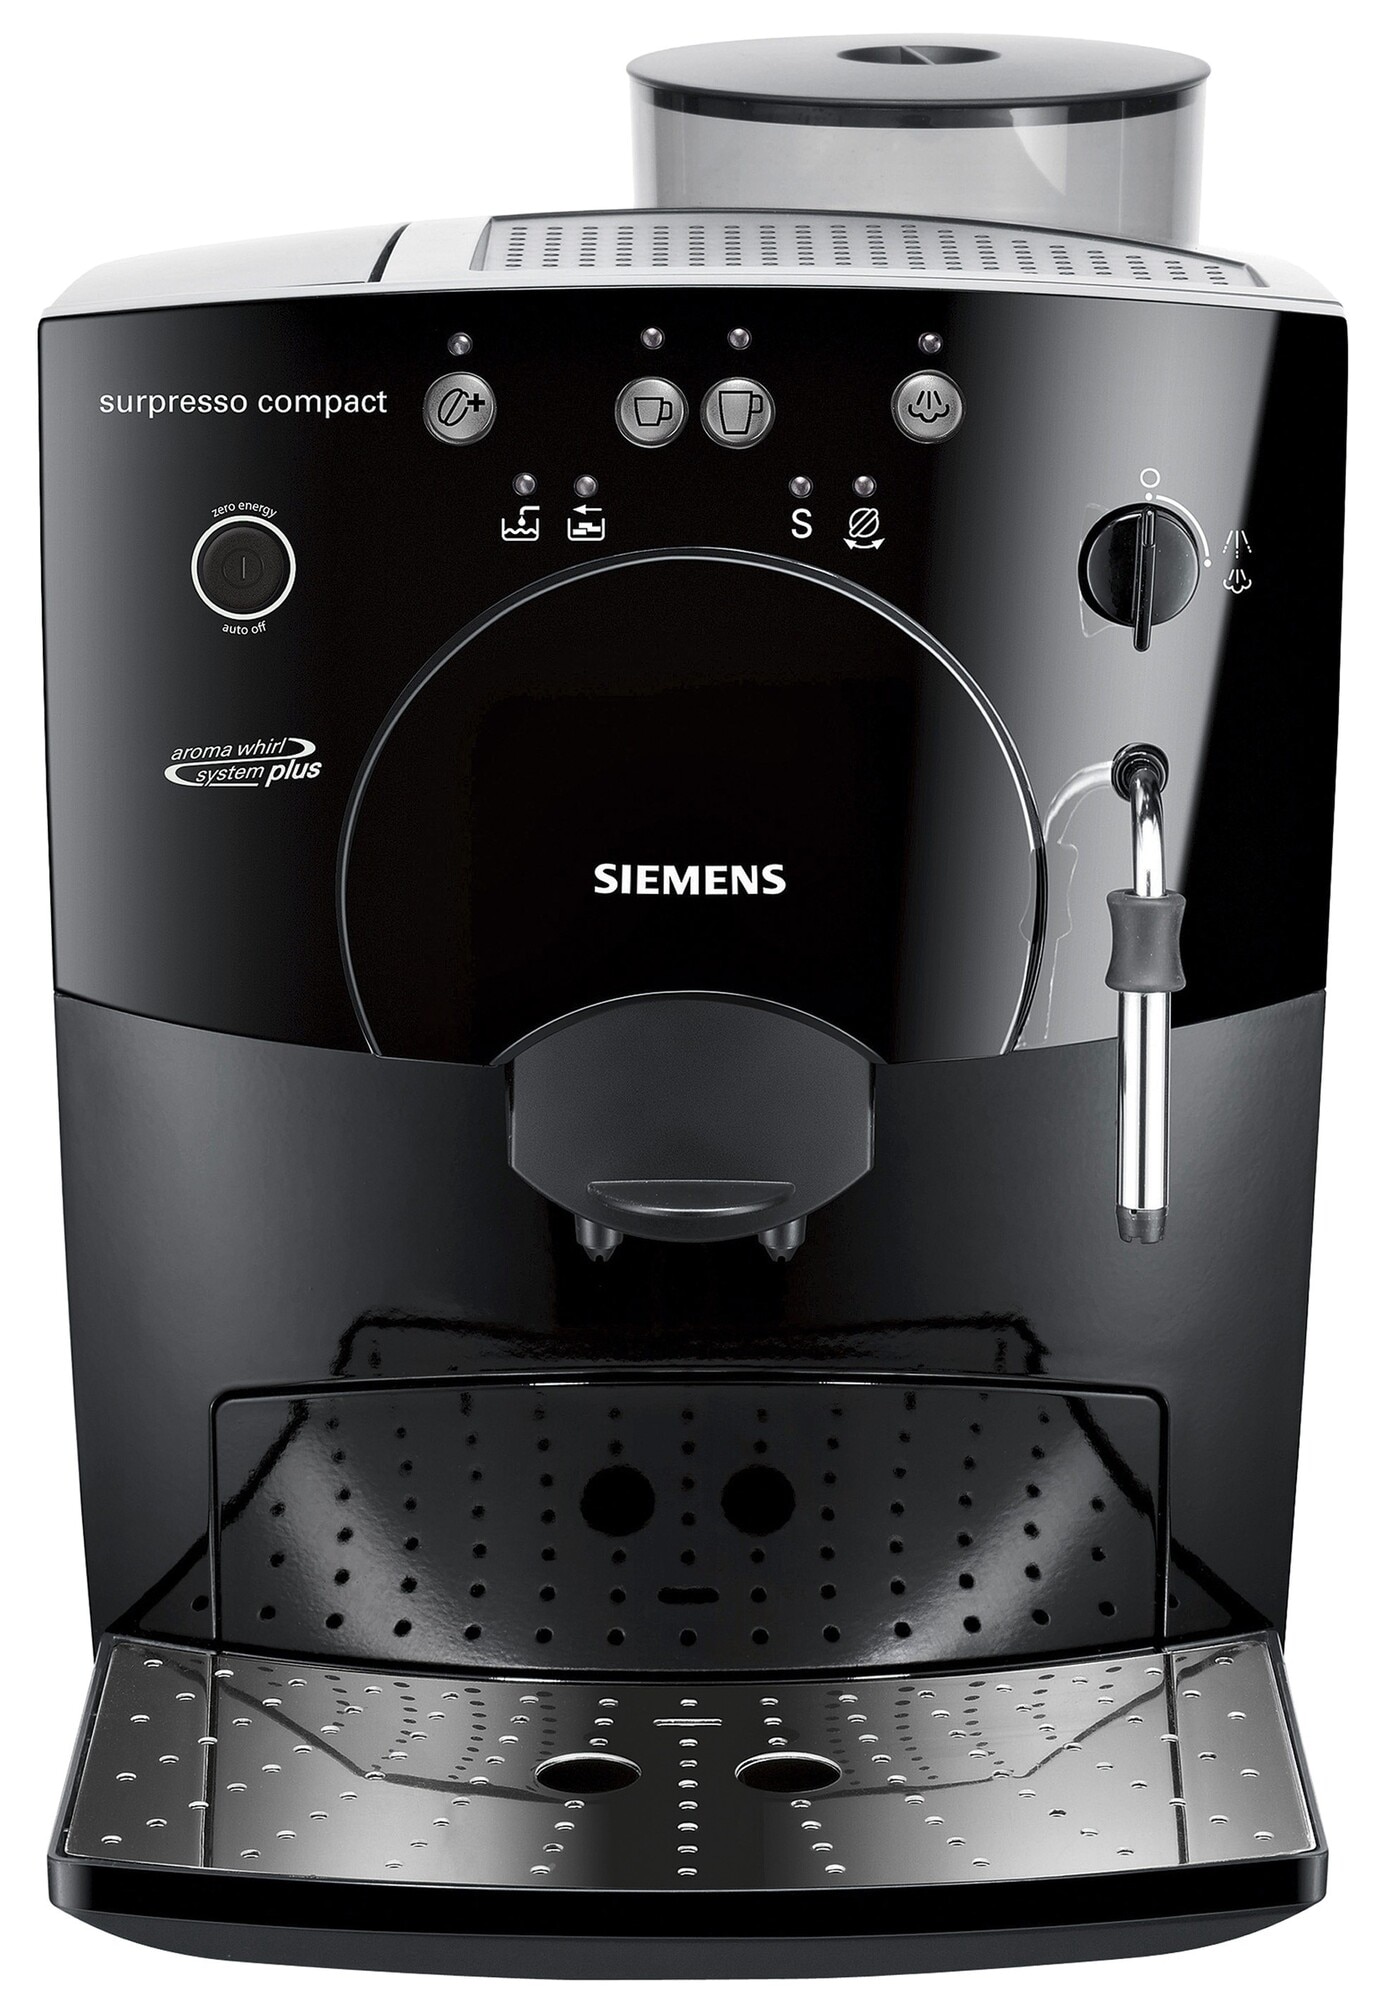 Siemens Surpresso Compact espressomaskine TK53009 | Elgiganten